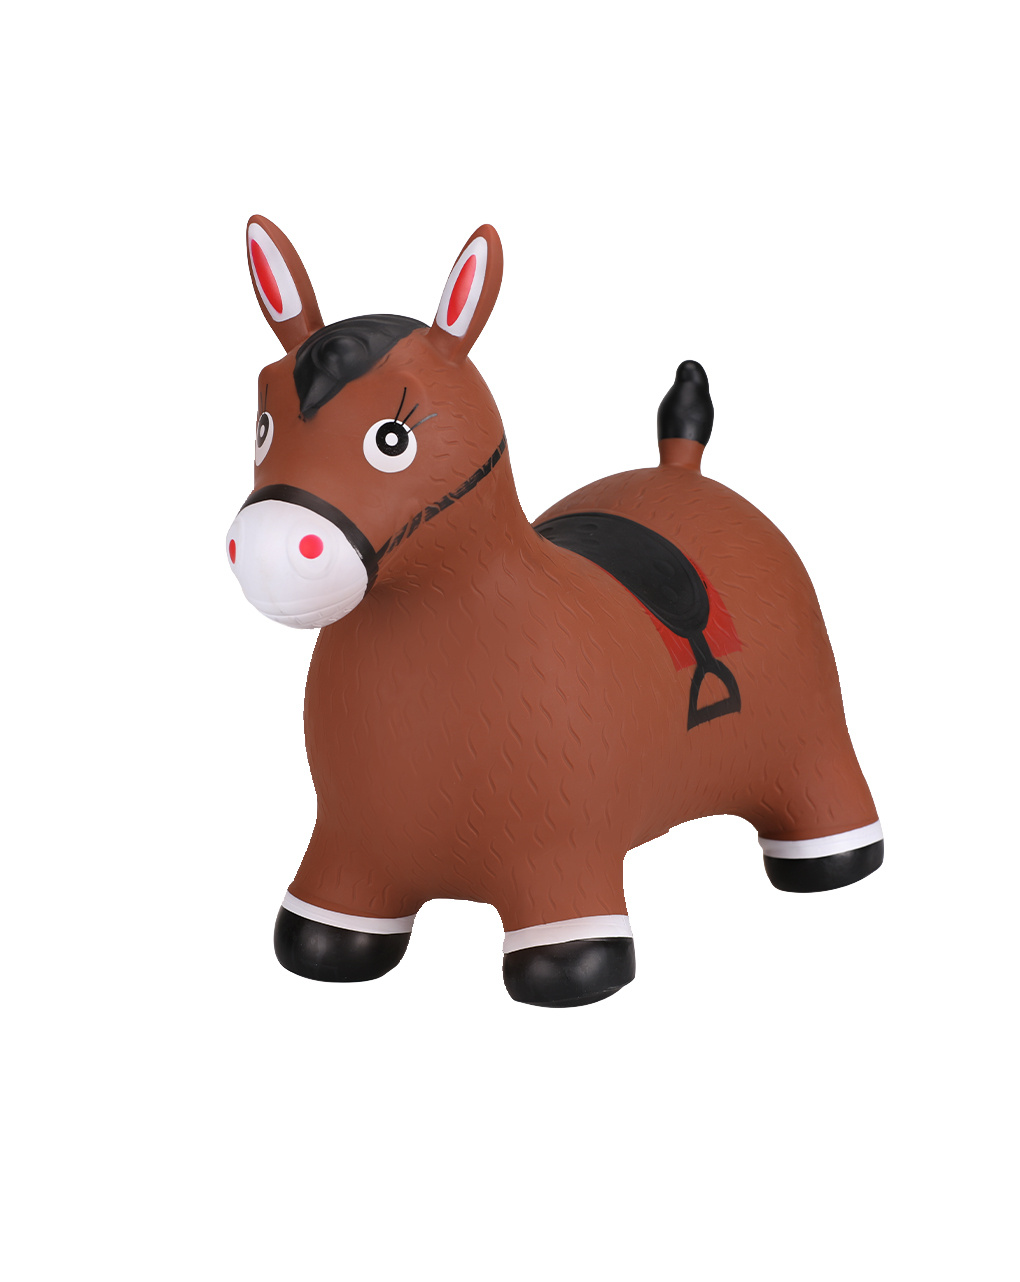 Rimbalzoo - carlos el caballo - 10m+ - proludis toys - PRO